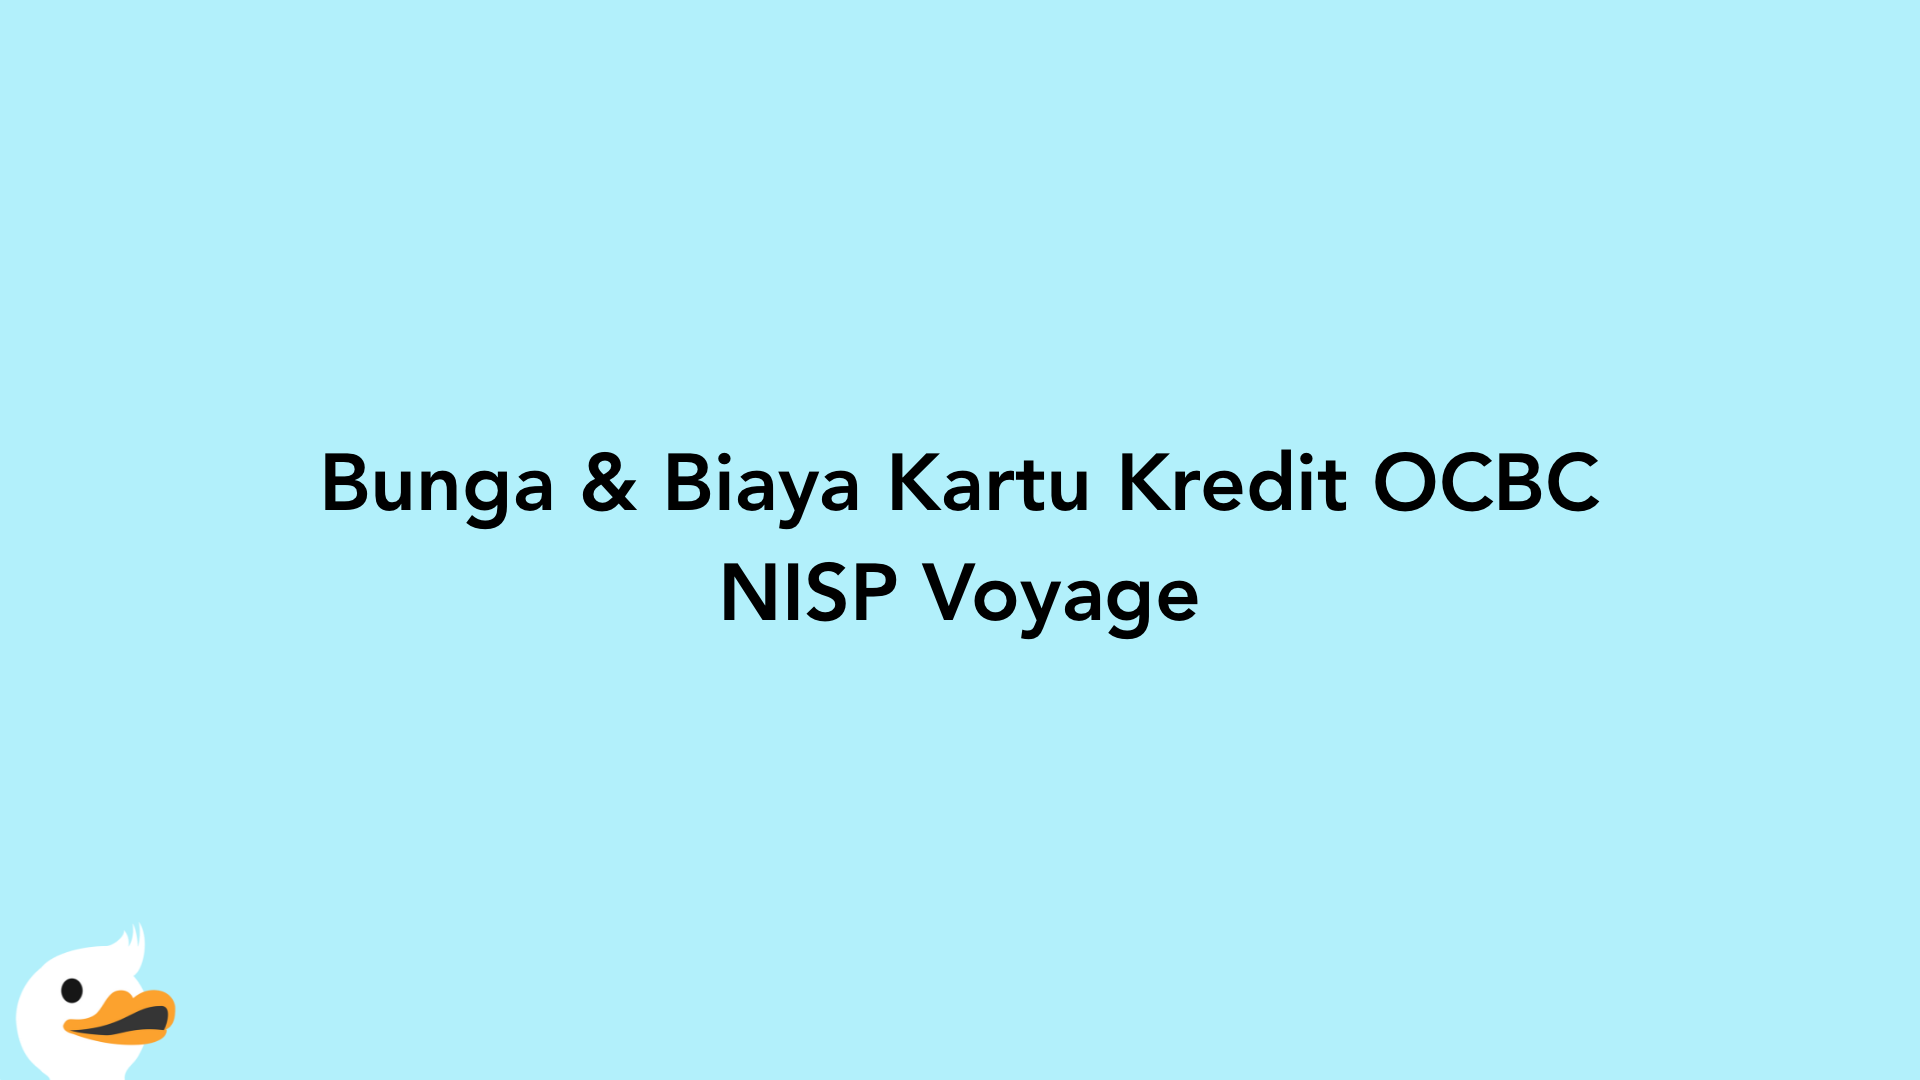 Bunga & Biaya Kartu Kredit OCBC NISP Voyage